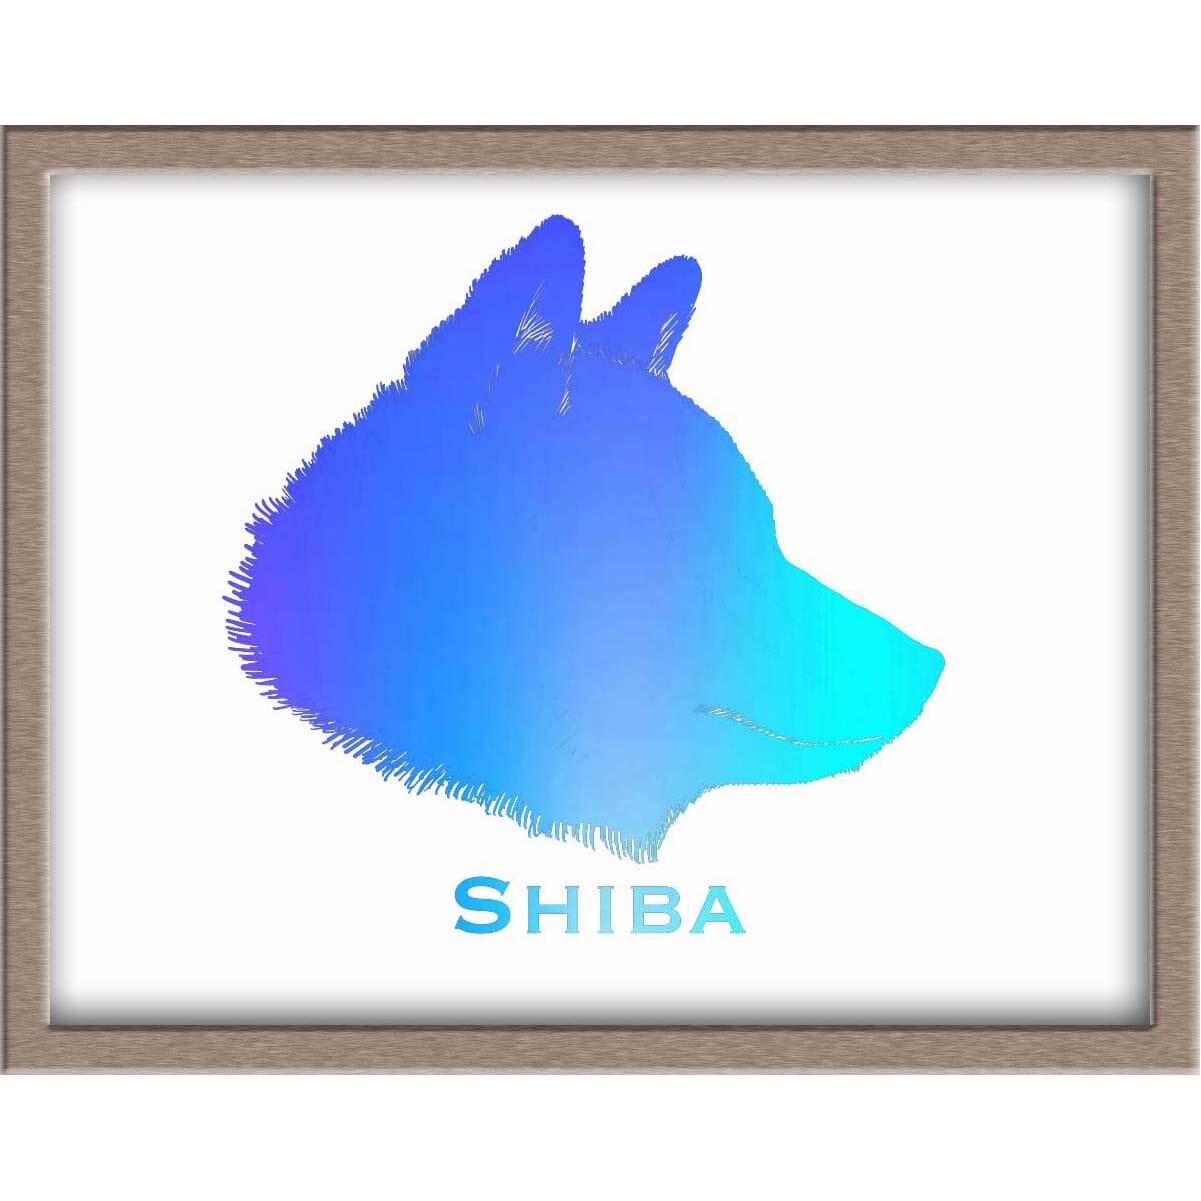 Shiba Inu Silhouette Foiled Print Posters, Prints, & Visual Artwork JoyousJoyfulJoyness 